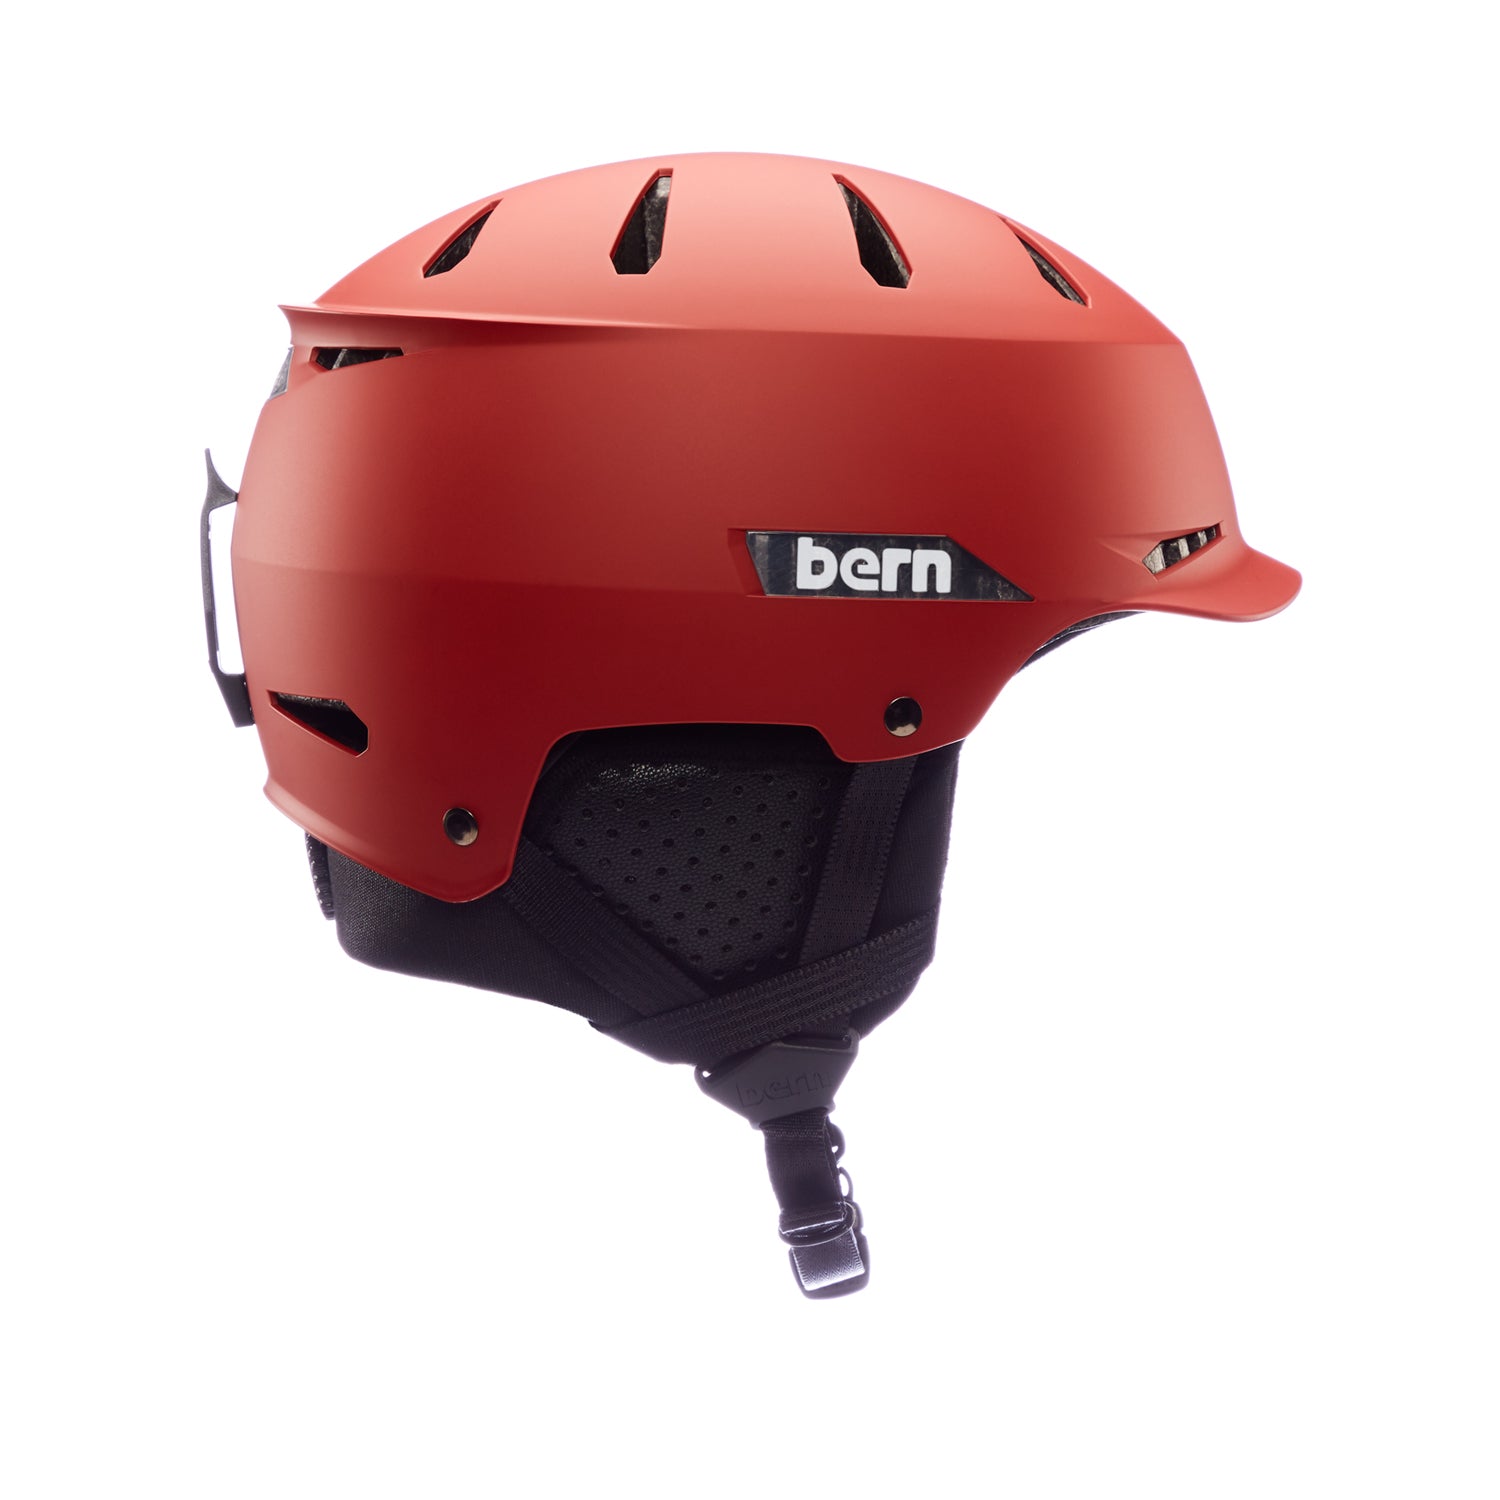 Hendrix Winter Helmet (Barn Deal)